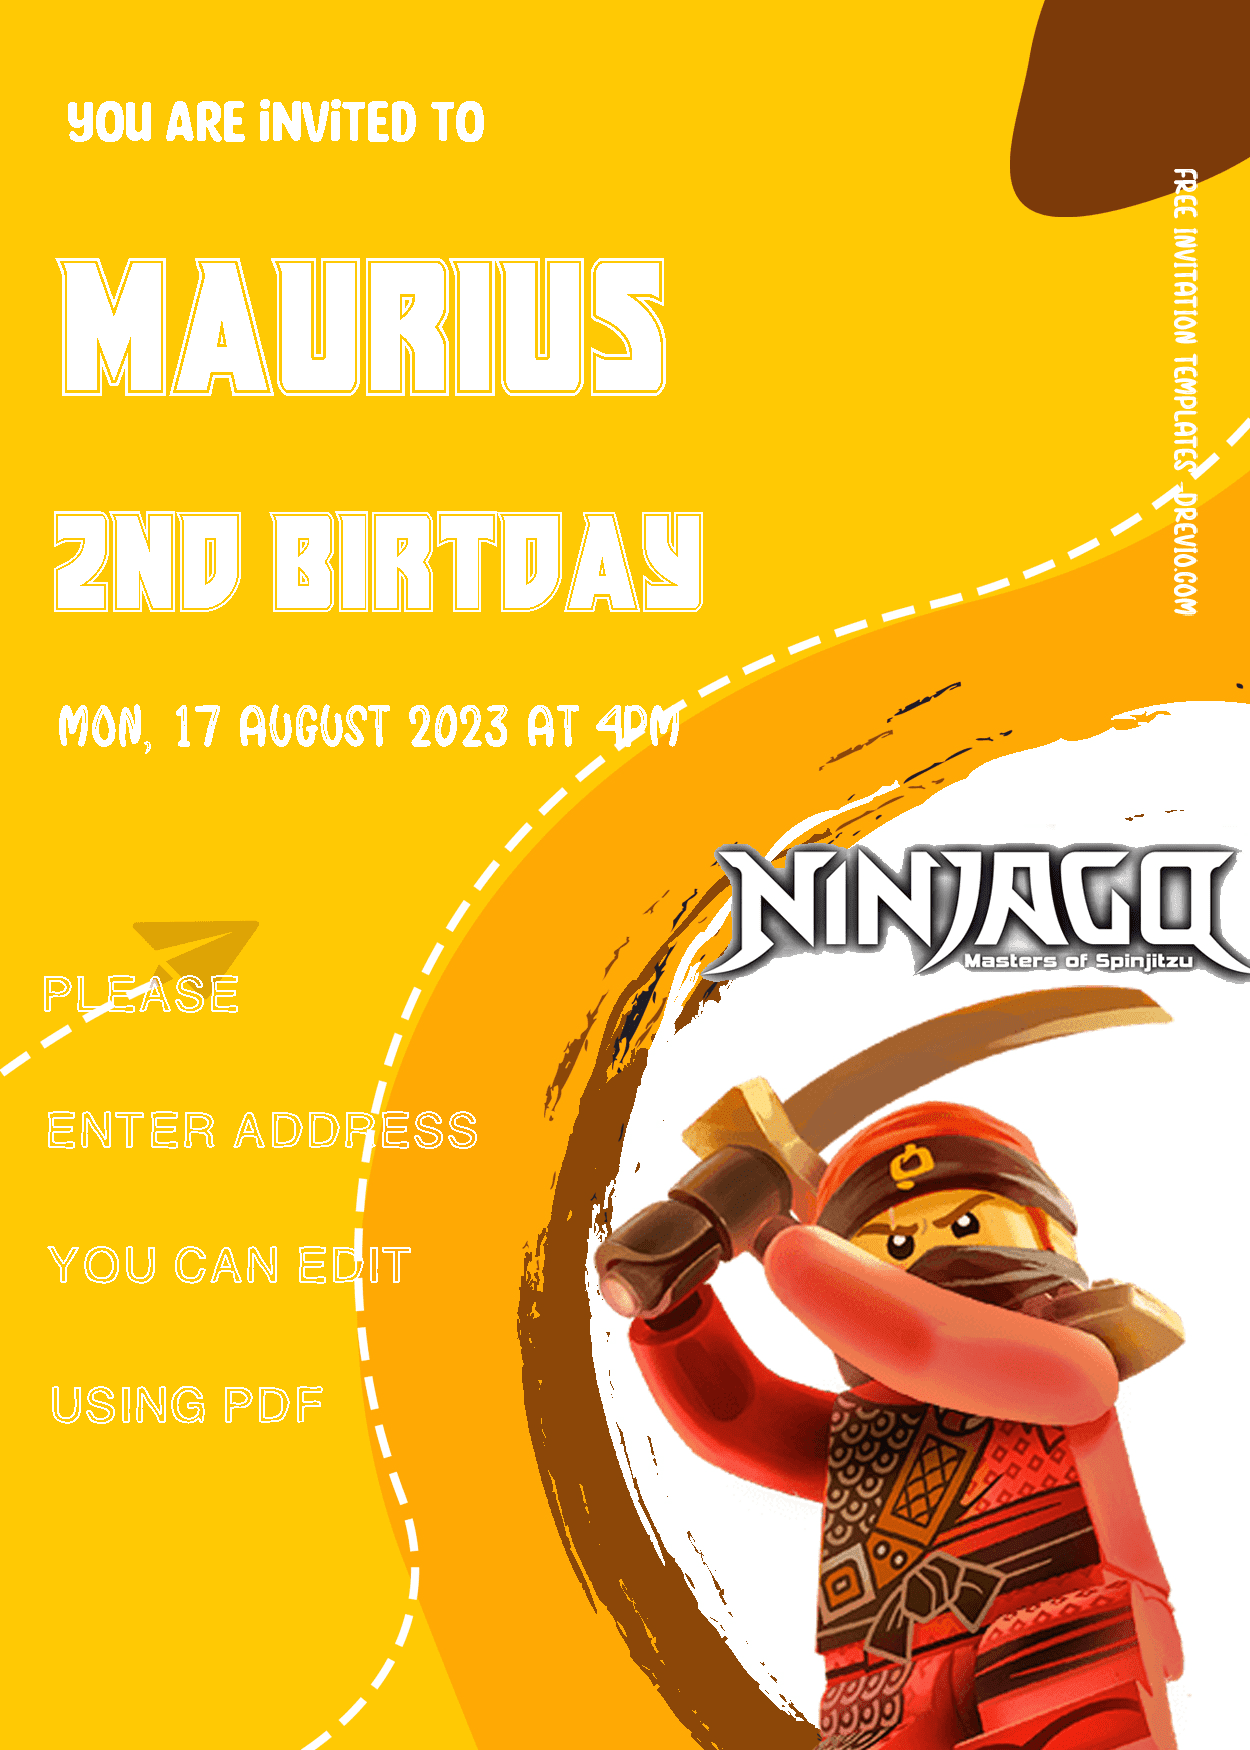 ( Free Editable PDF ) Lego Ninjago Birthday Invitation Templates Three